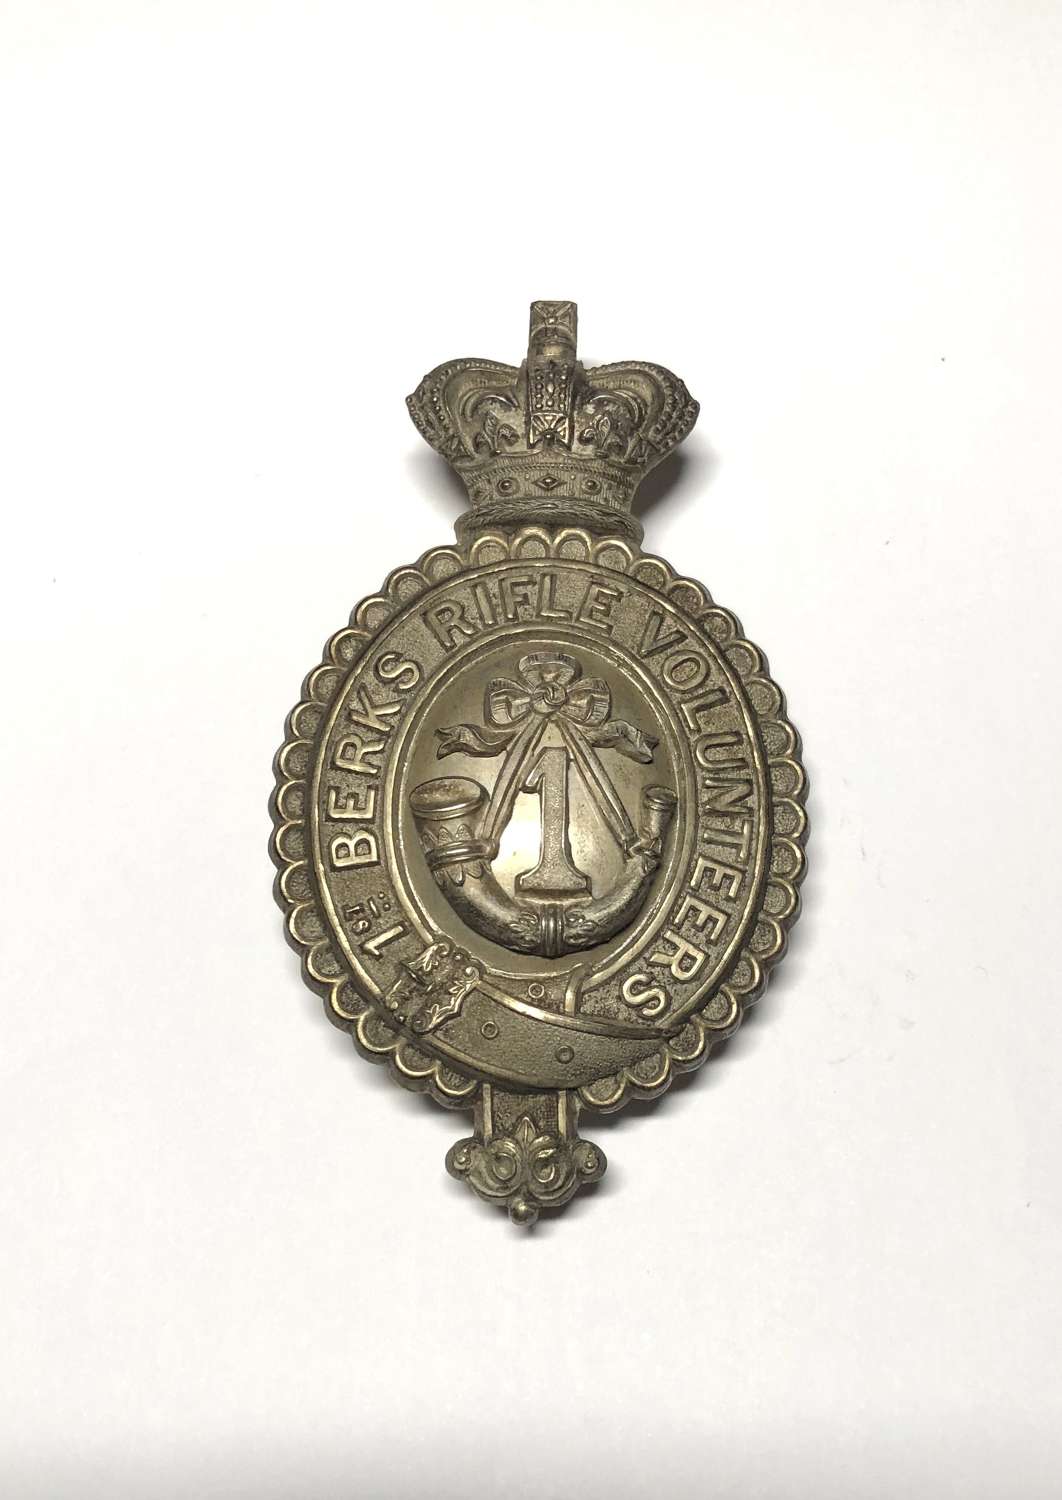 1st Berkshire Rifle Volunteers Victorian Officer’s pouch belt plate